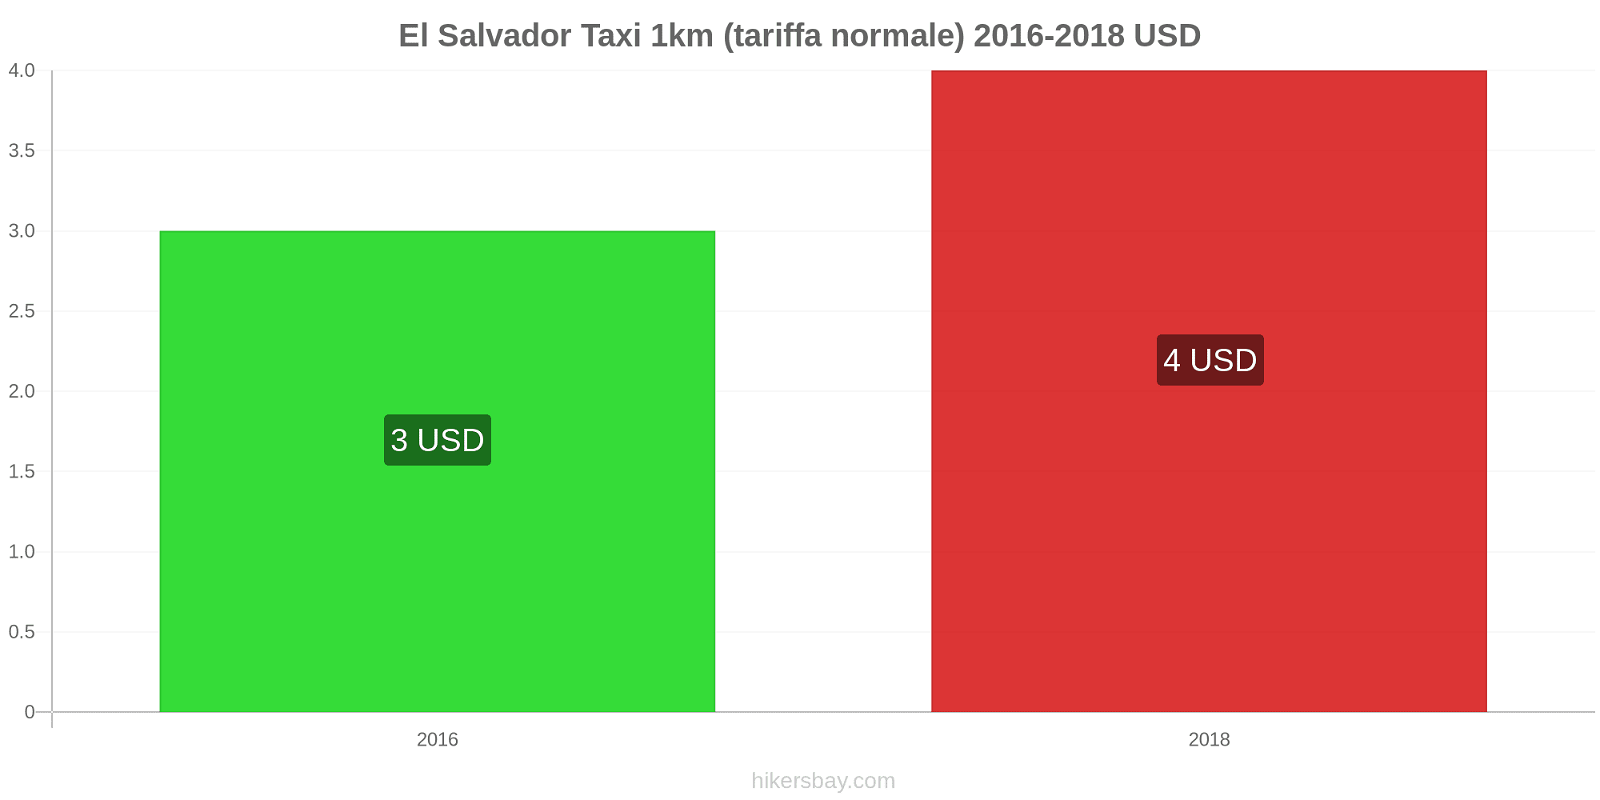 El Salvador cambi di prezzo Taxi 1km (tariffa normale) hikersbay.com